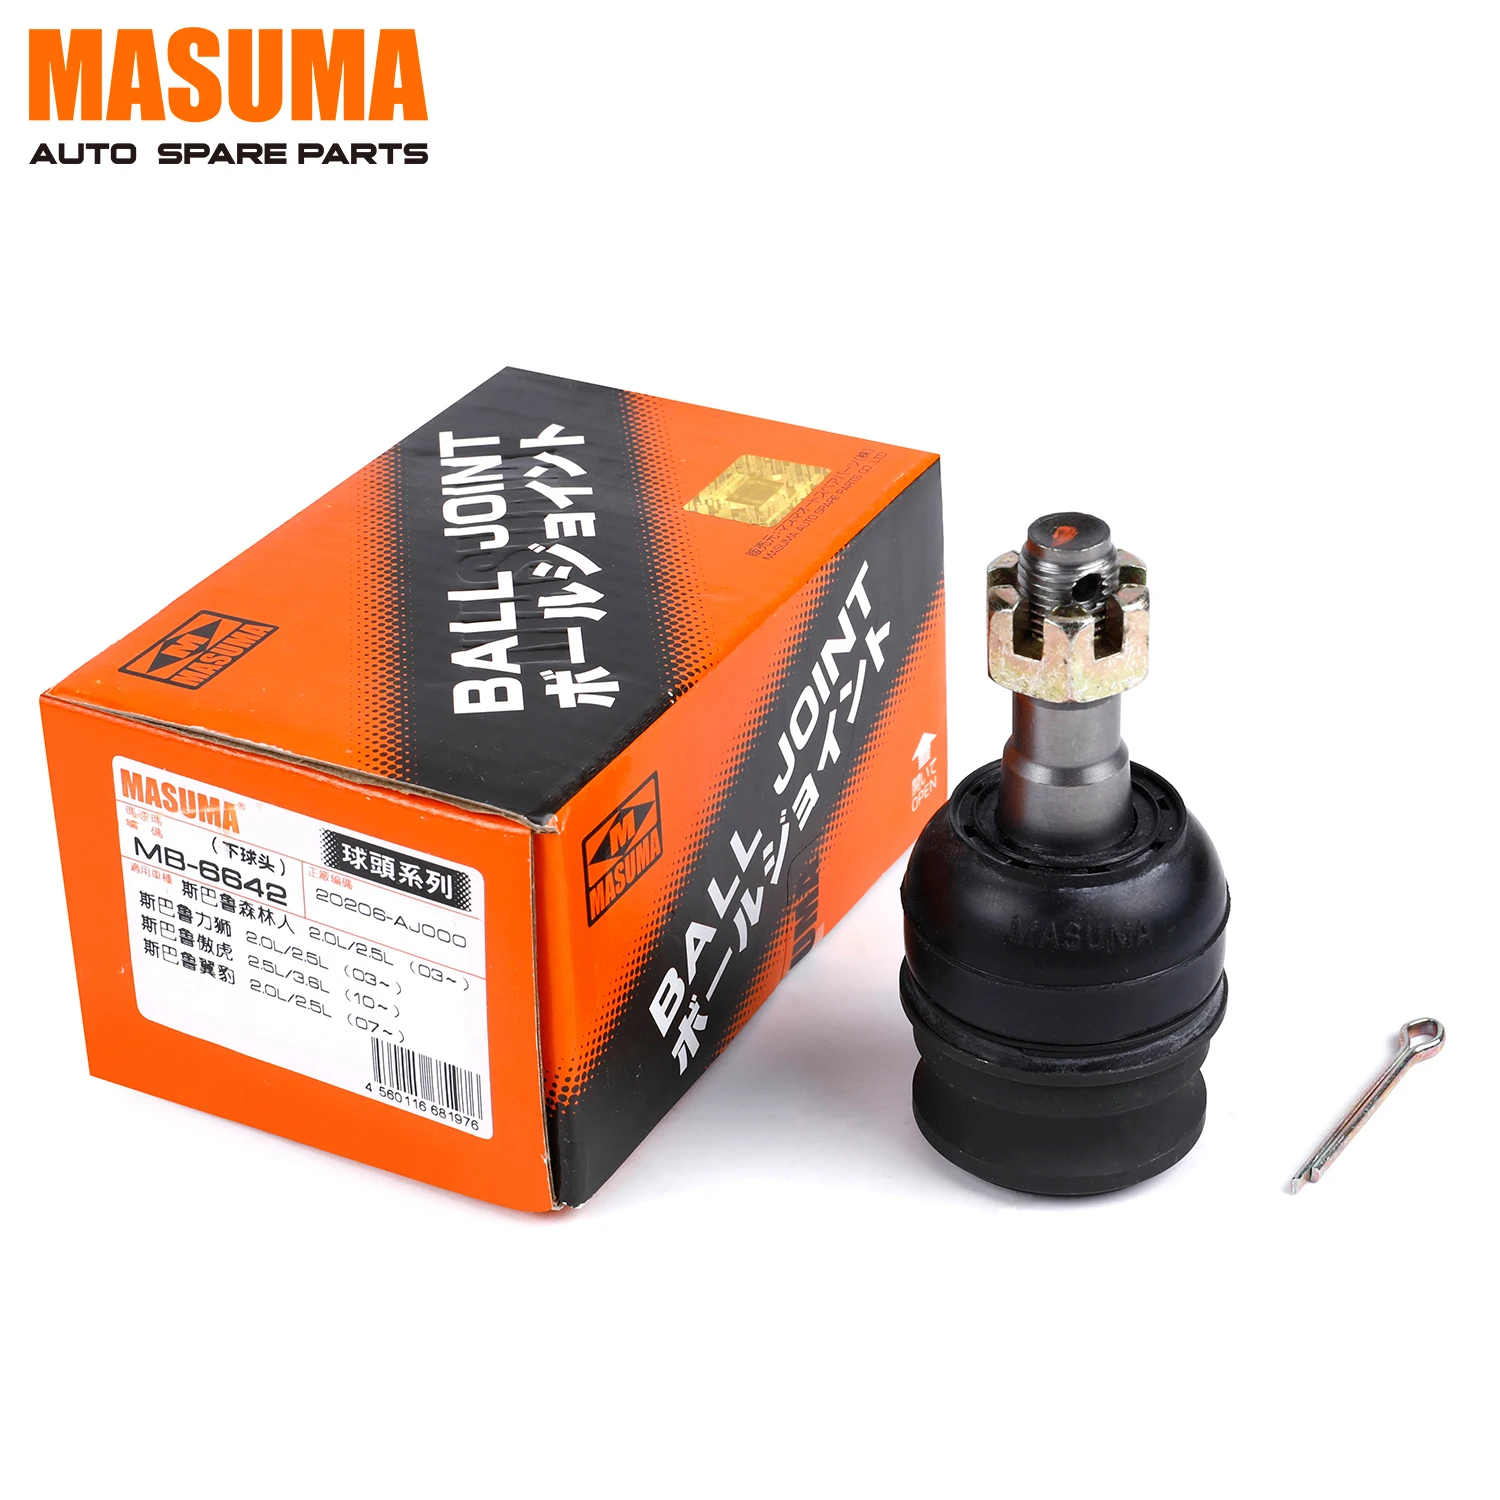 Mb-6642 Masuma Auto Suspension Systems Ball Joint 21067ga050 20200aa040  20206aj000 21037ga050 21067ga050 For Subaru Legacy Ya4 - Buy Myanmar Ball  Joint,Ball Joint,Auto Suspension Systems Product on